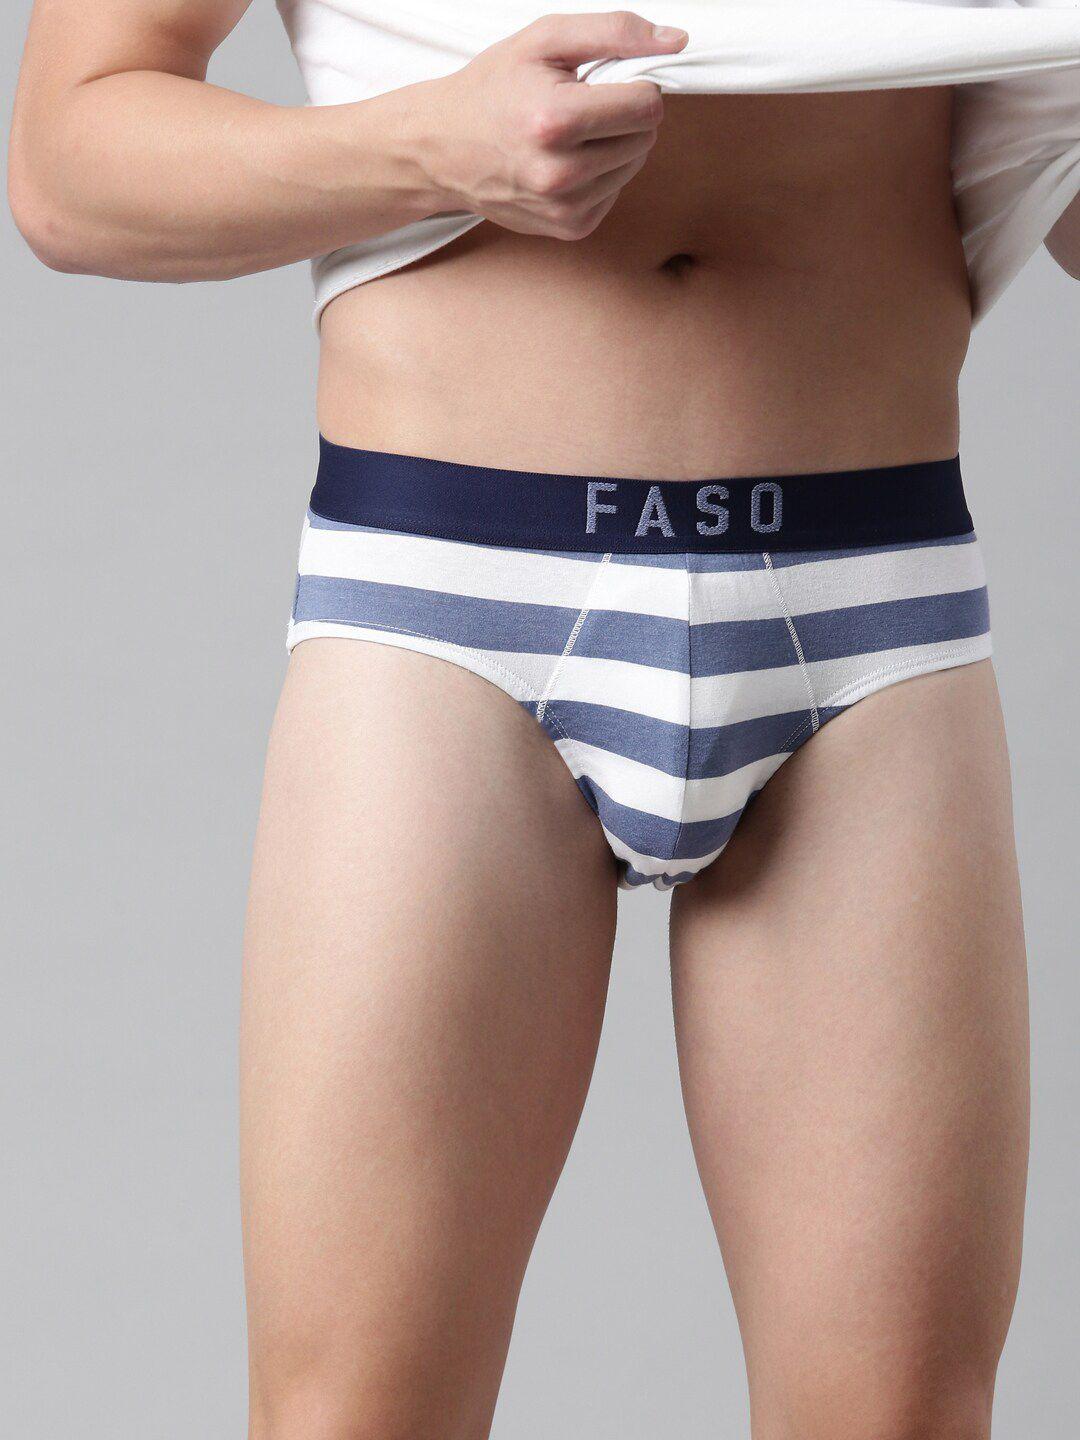 faso striped mid-rise cotton basic briefs fs2003-sq-white